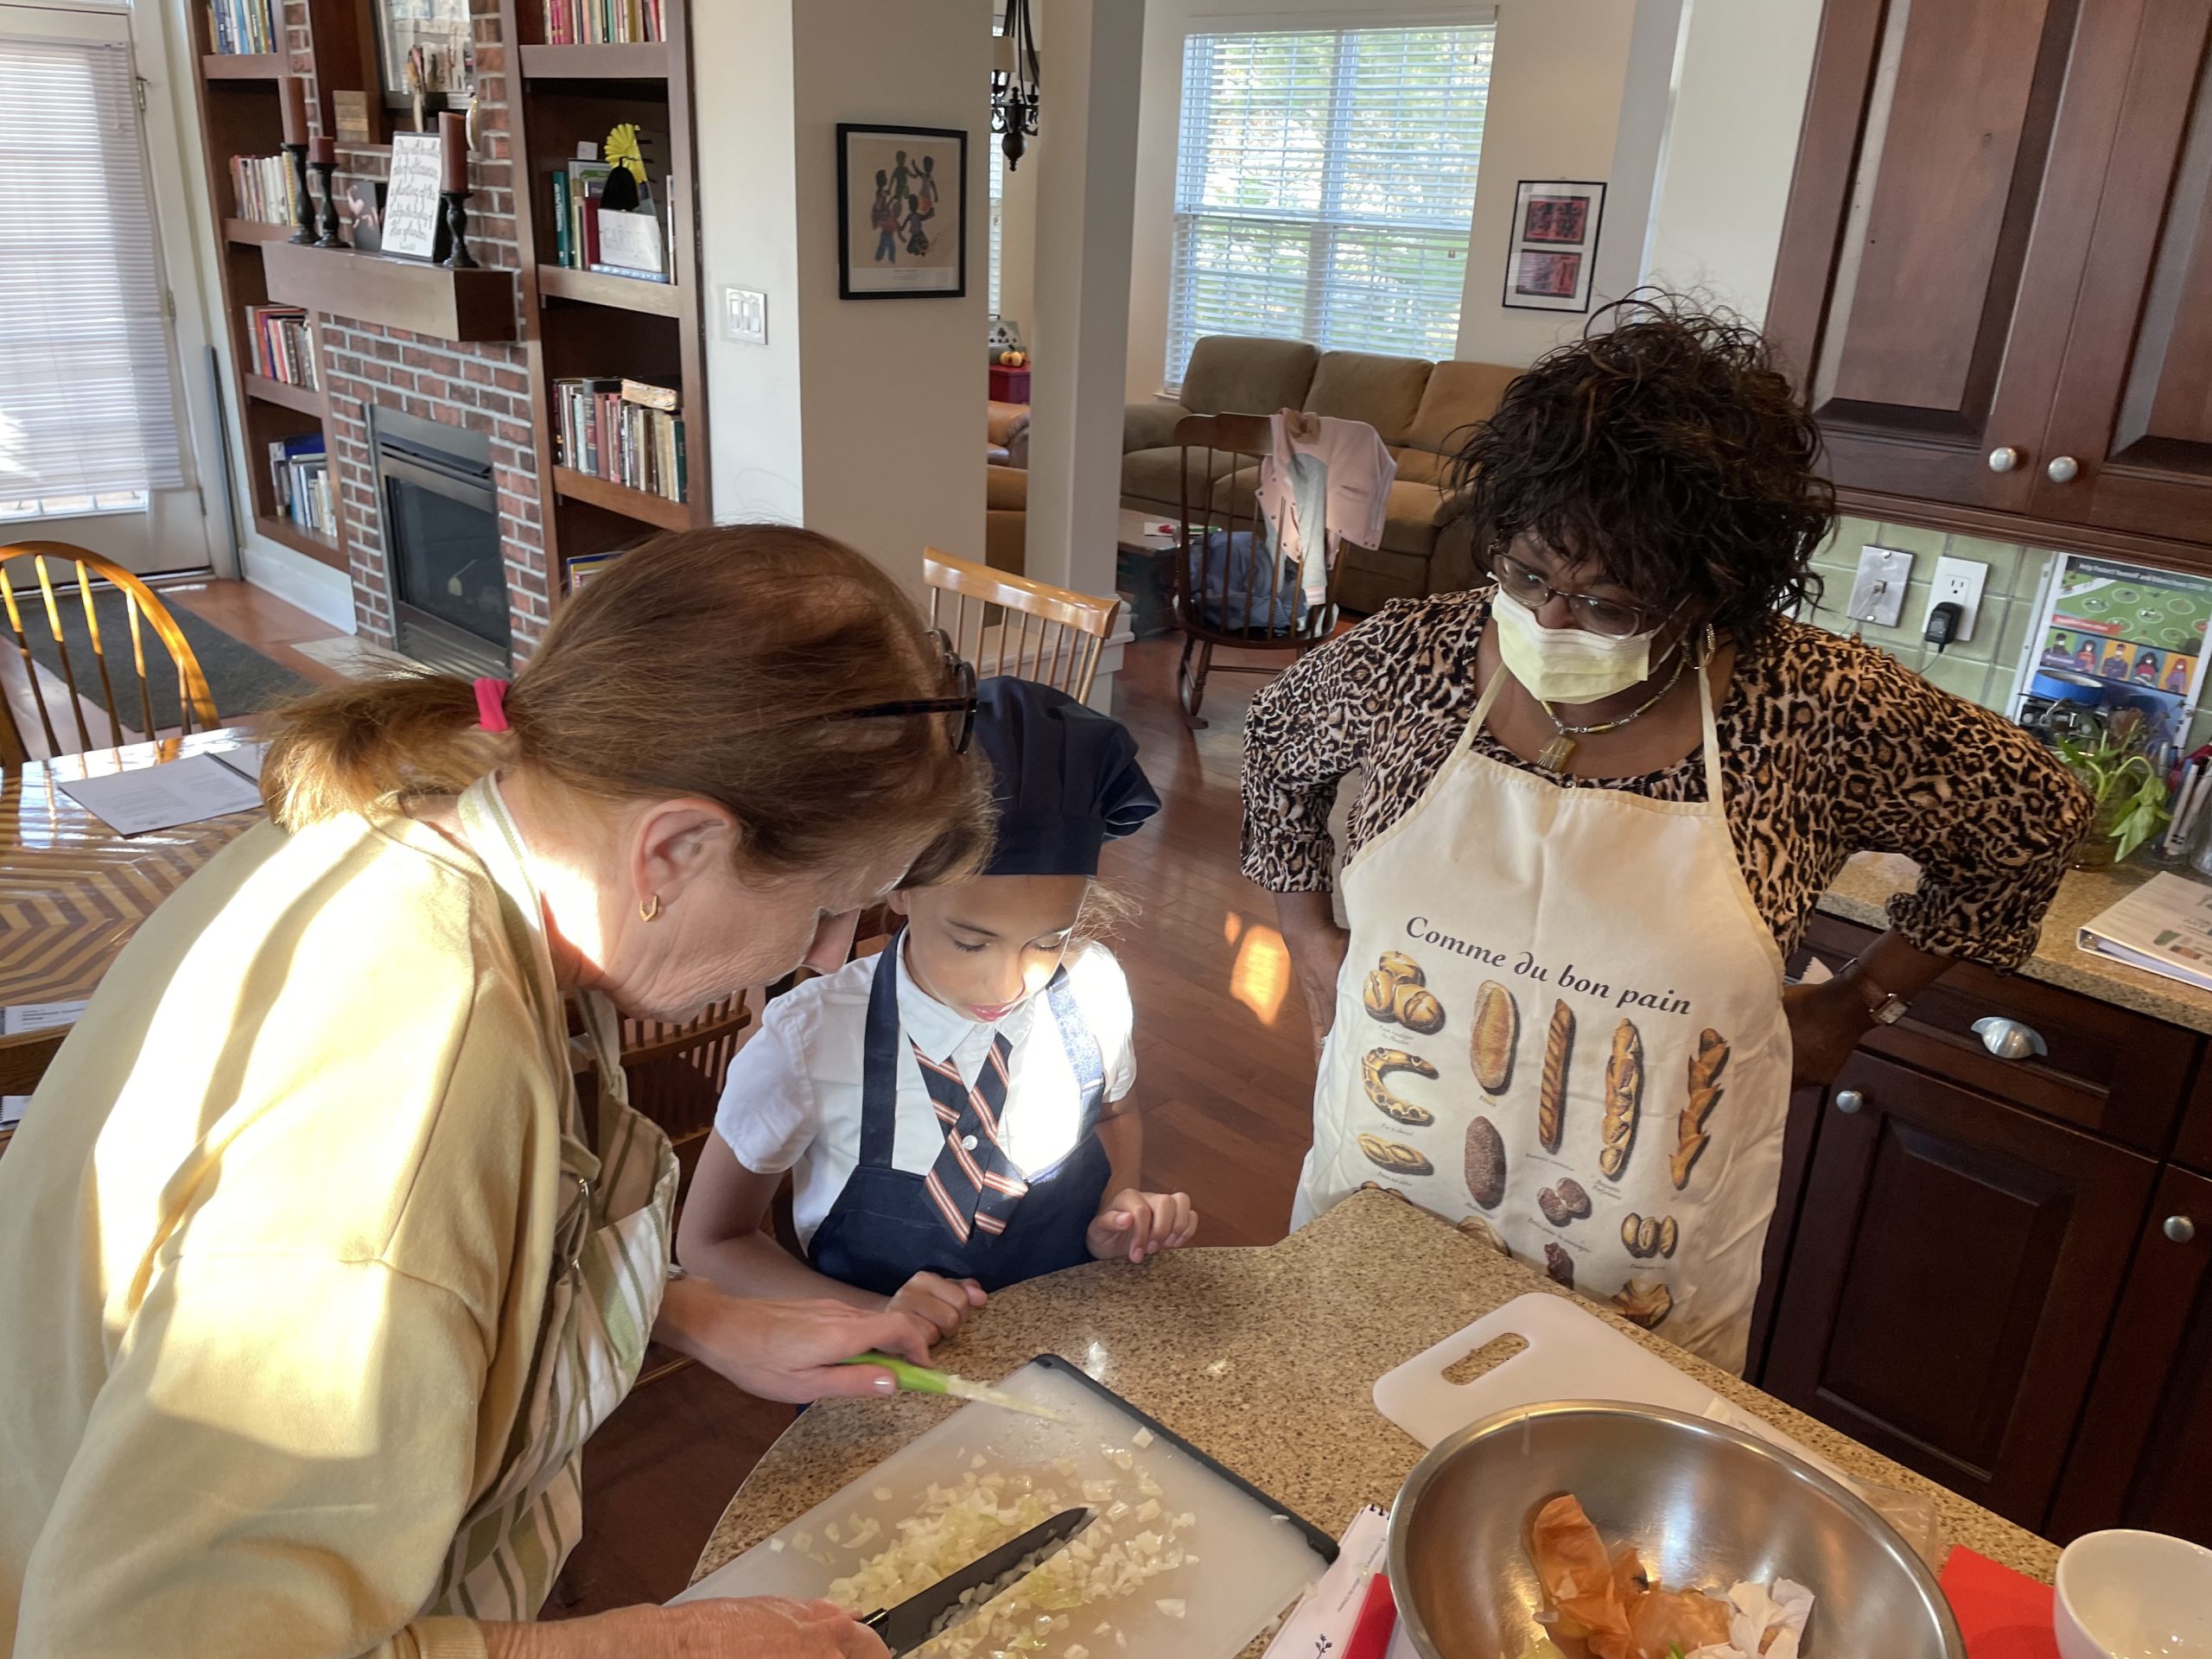 Belinda Rosen demonstrates how to chop an onion for Alyssa Pagan, as Bonita Bell looks on.